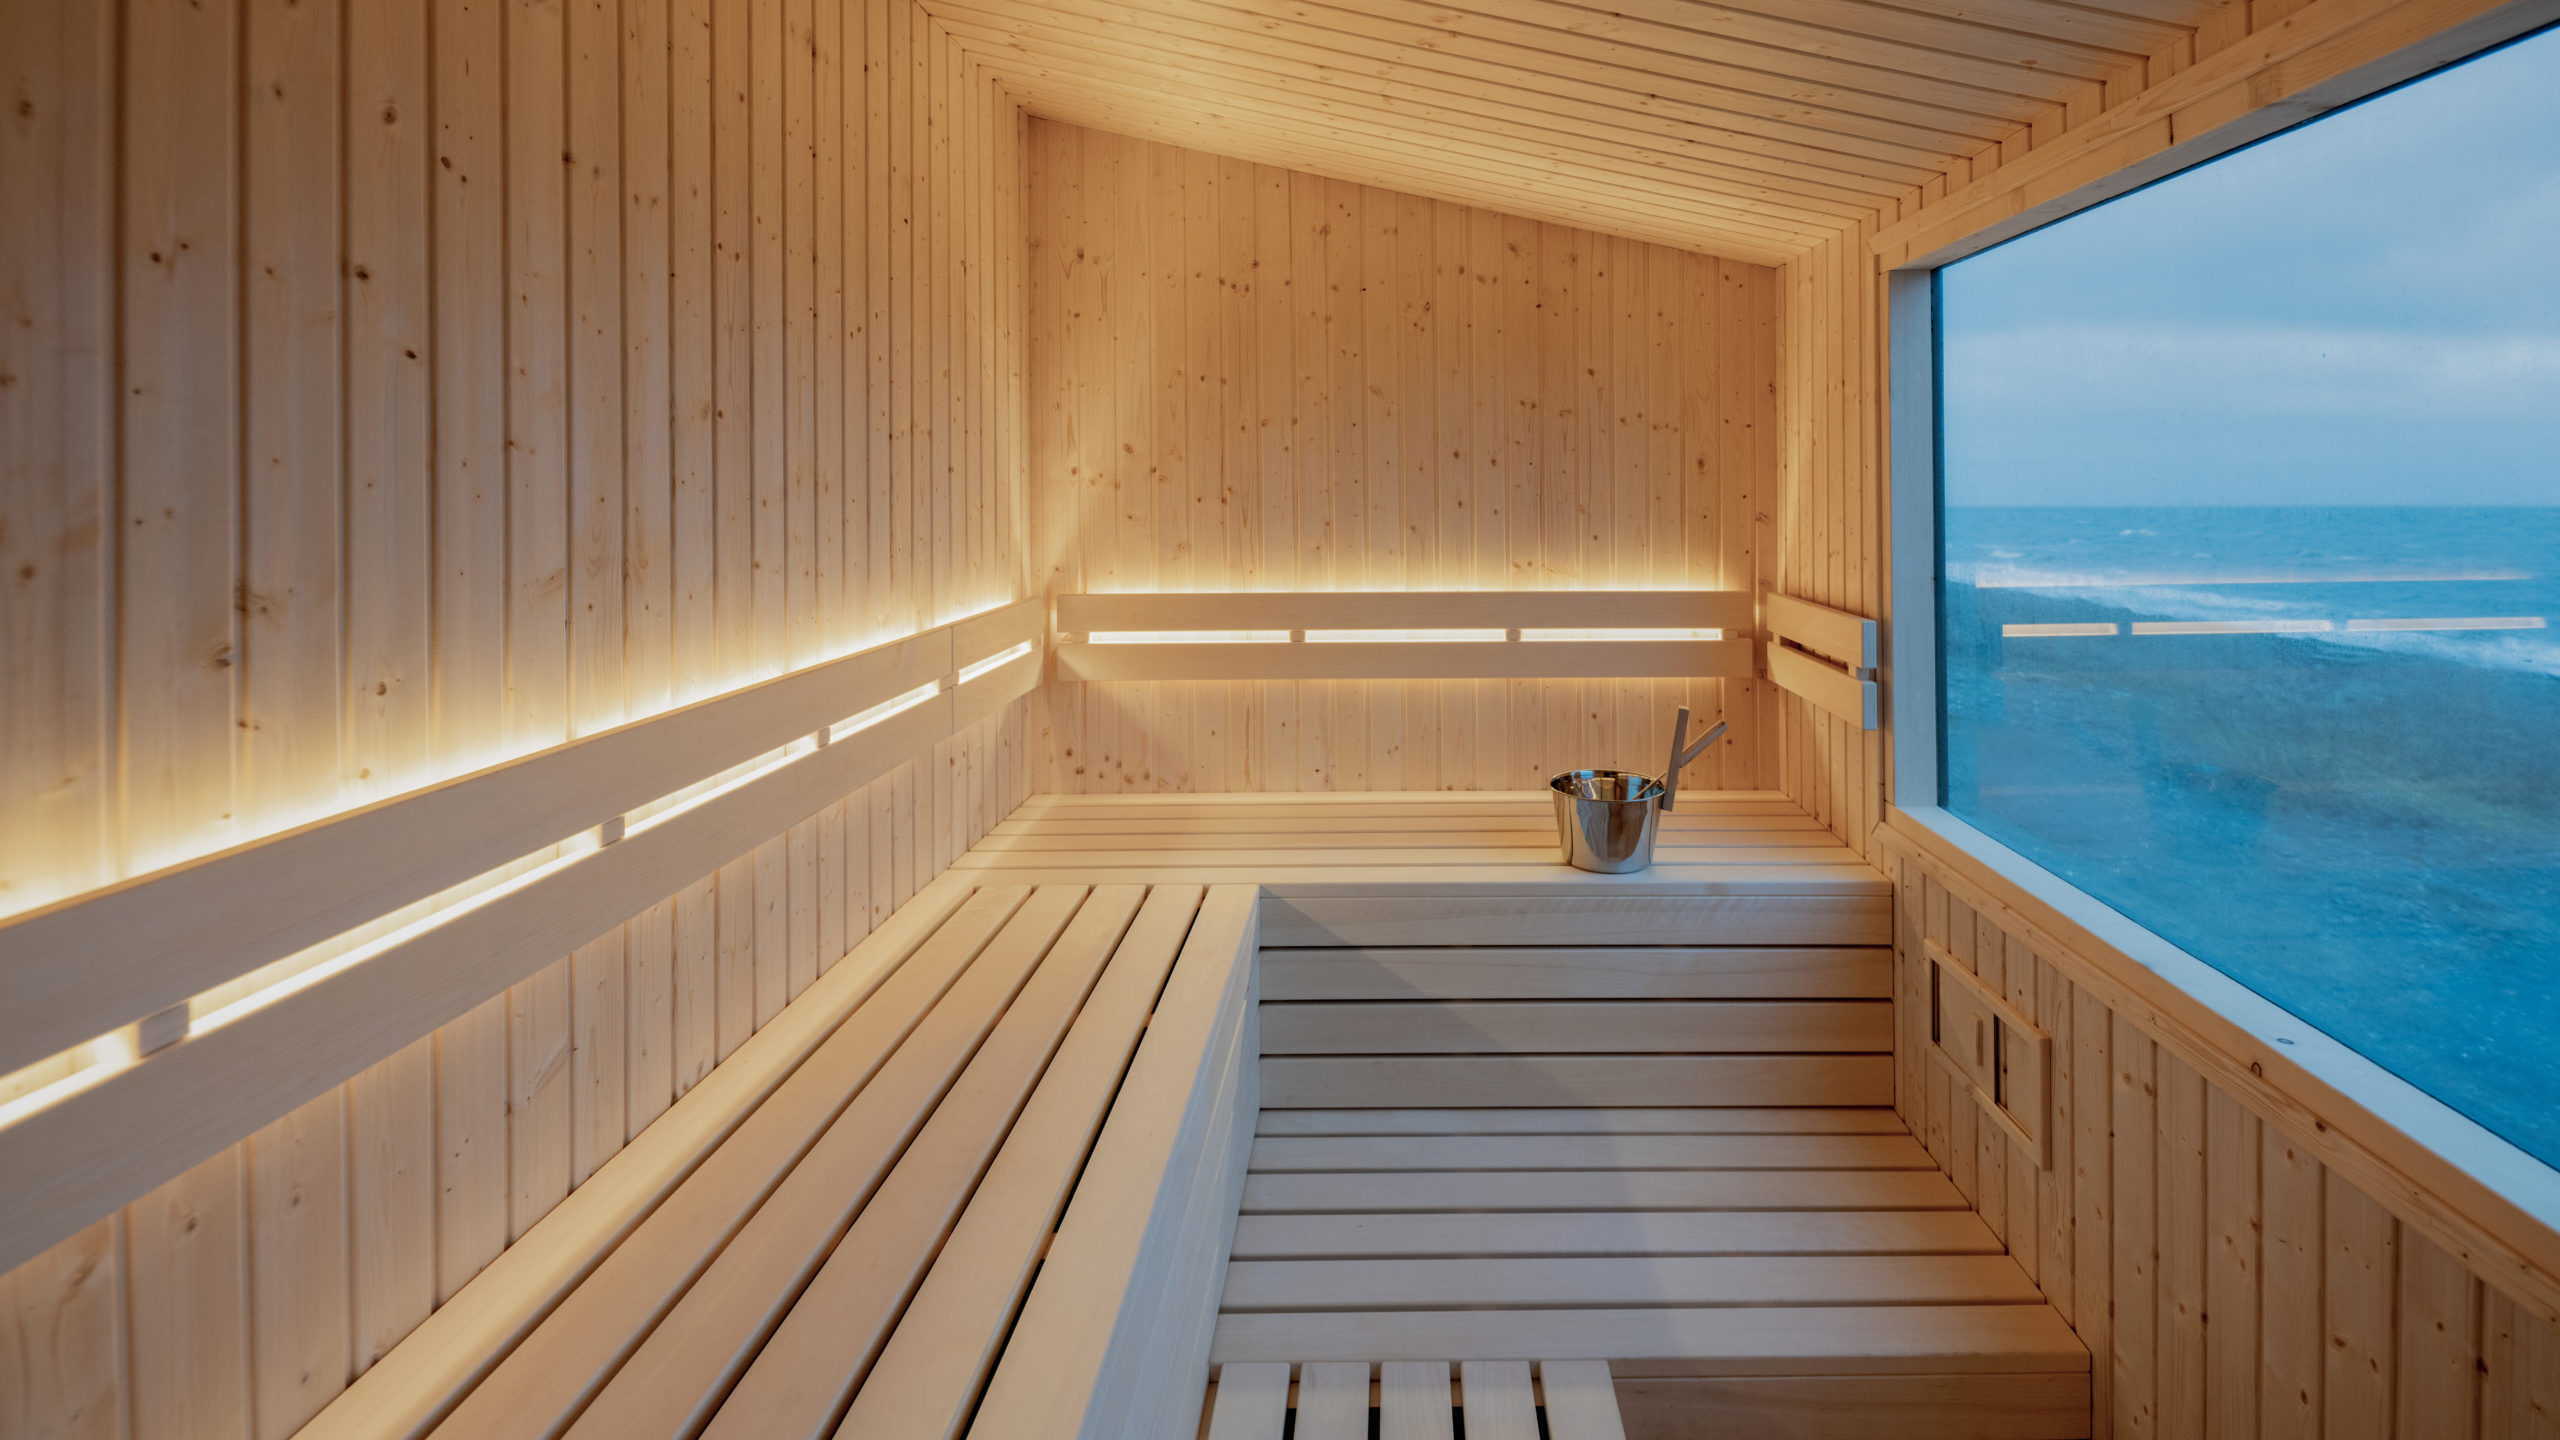 mobile sauna by narrative